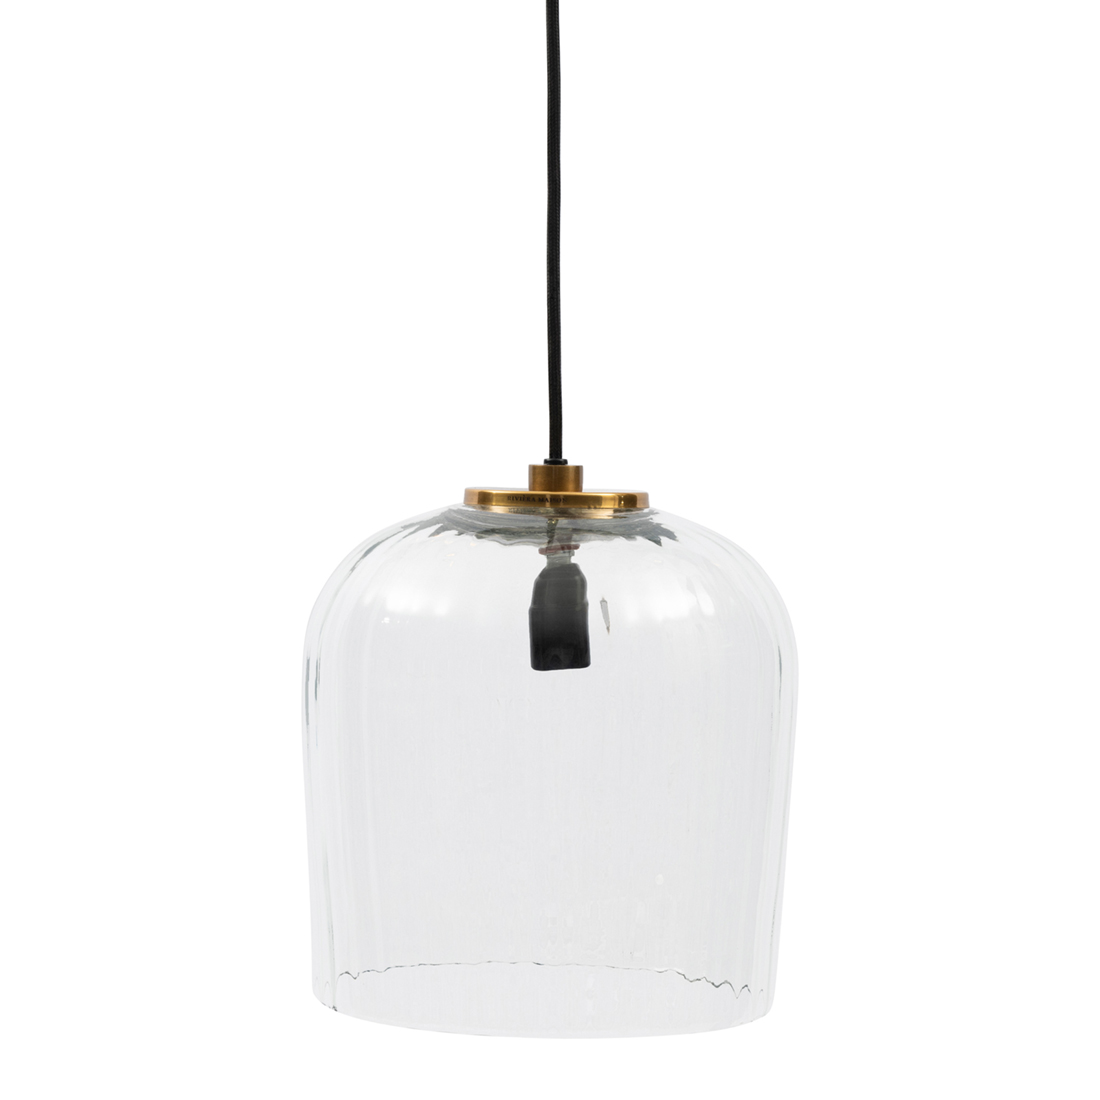 Riviera Maison Hanglamp Glas, Ronde bovenkant, Woonkamer, Keuken, Slaapkamer - RM Menton Hanging Lamp - Transparant - Glas, Metaal